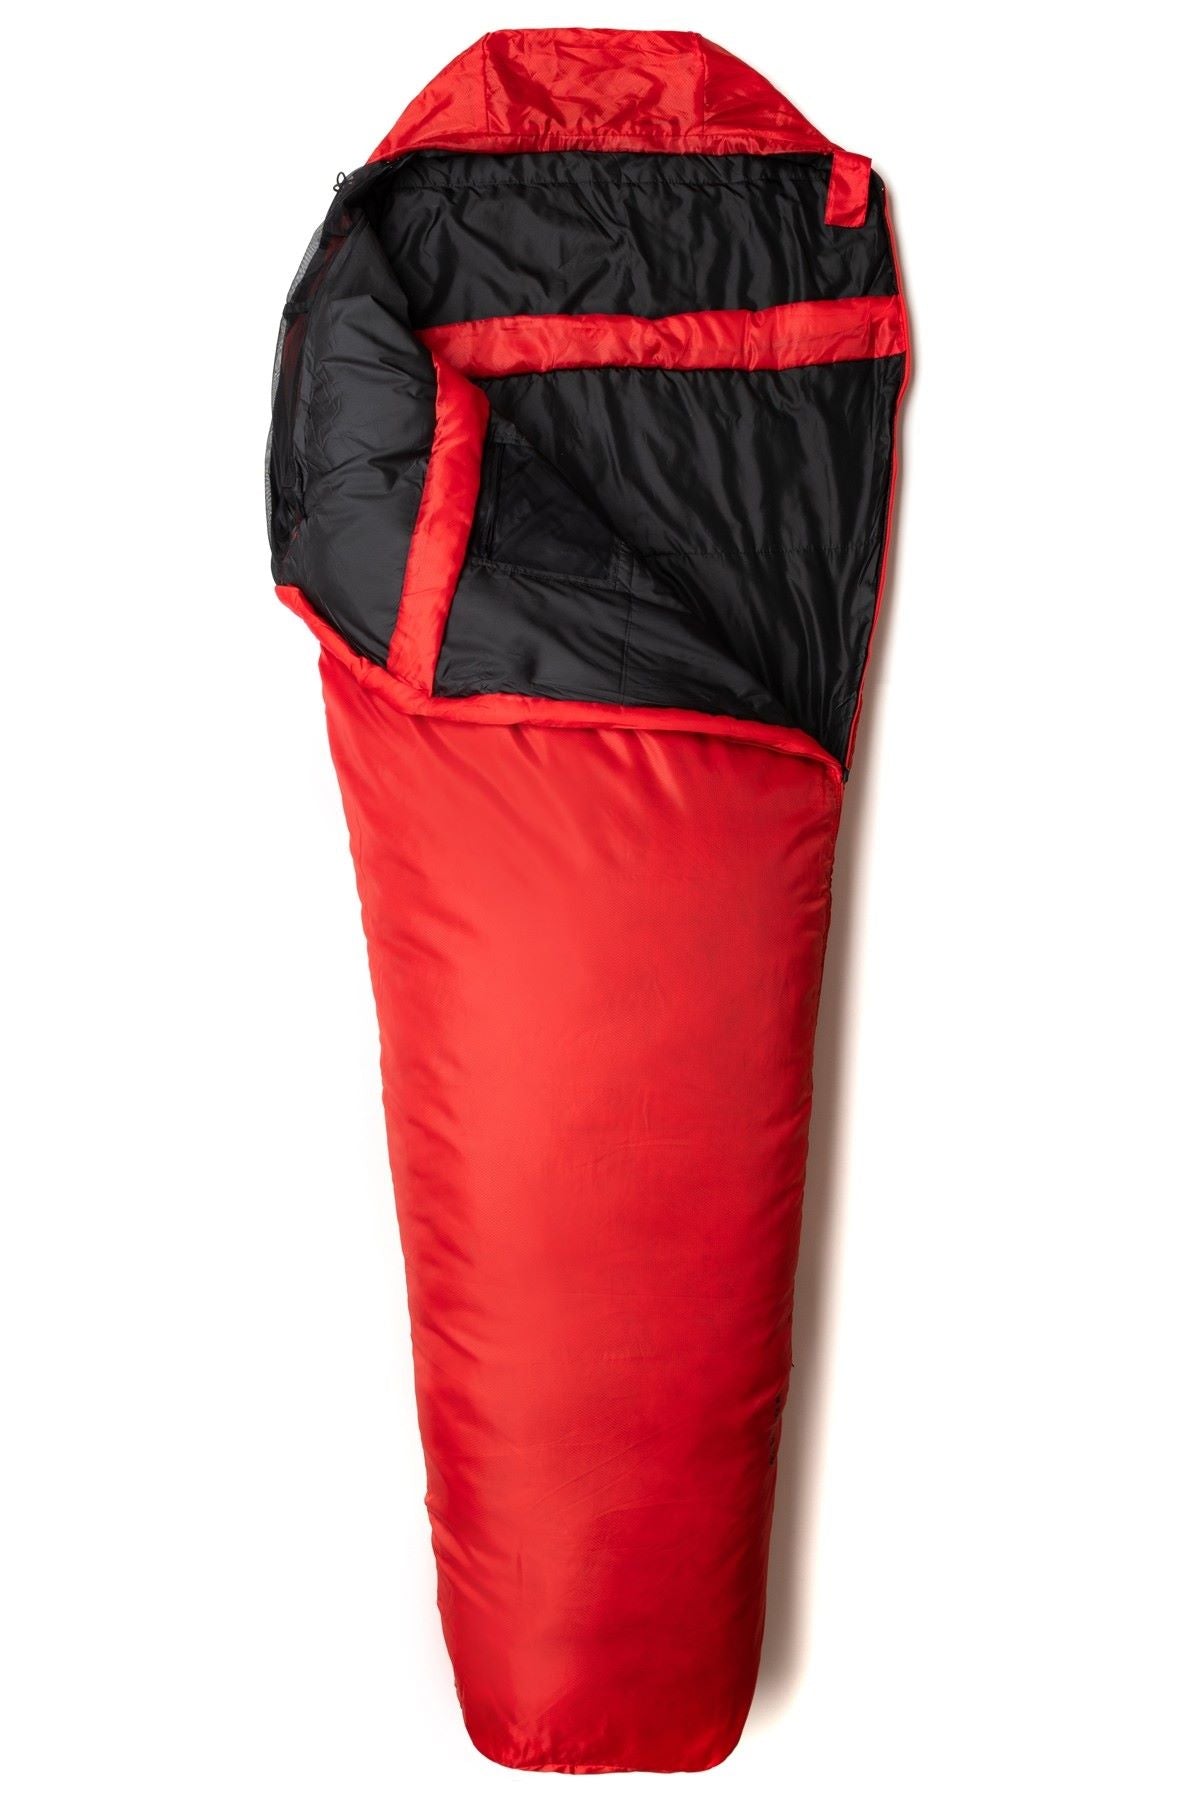 Snugpak Travelpak 1 Sleeping Bag (Flame Red)